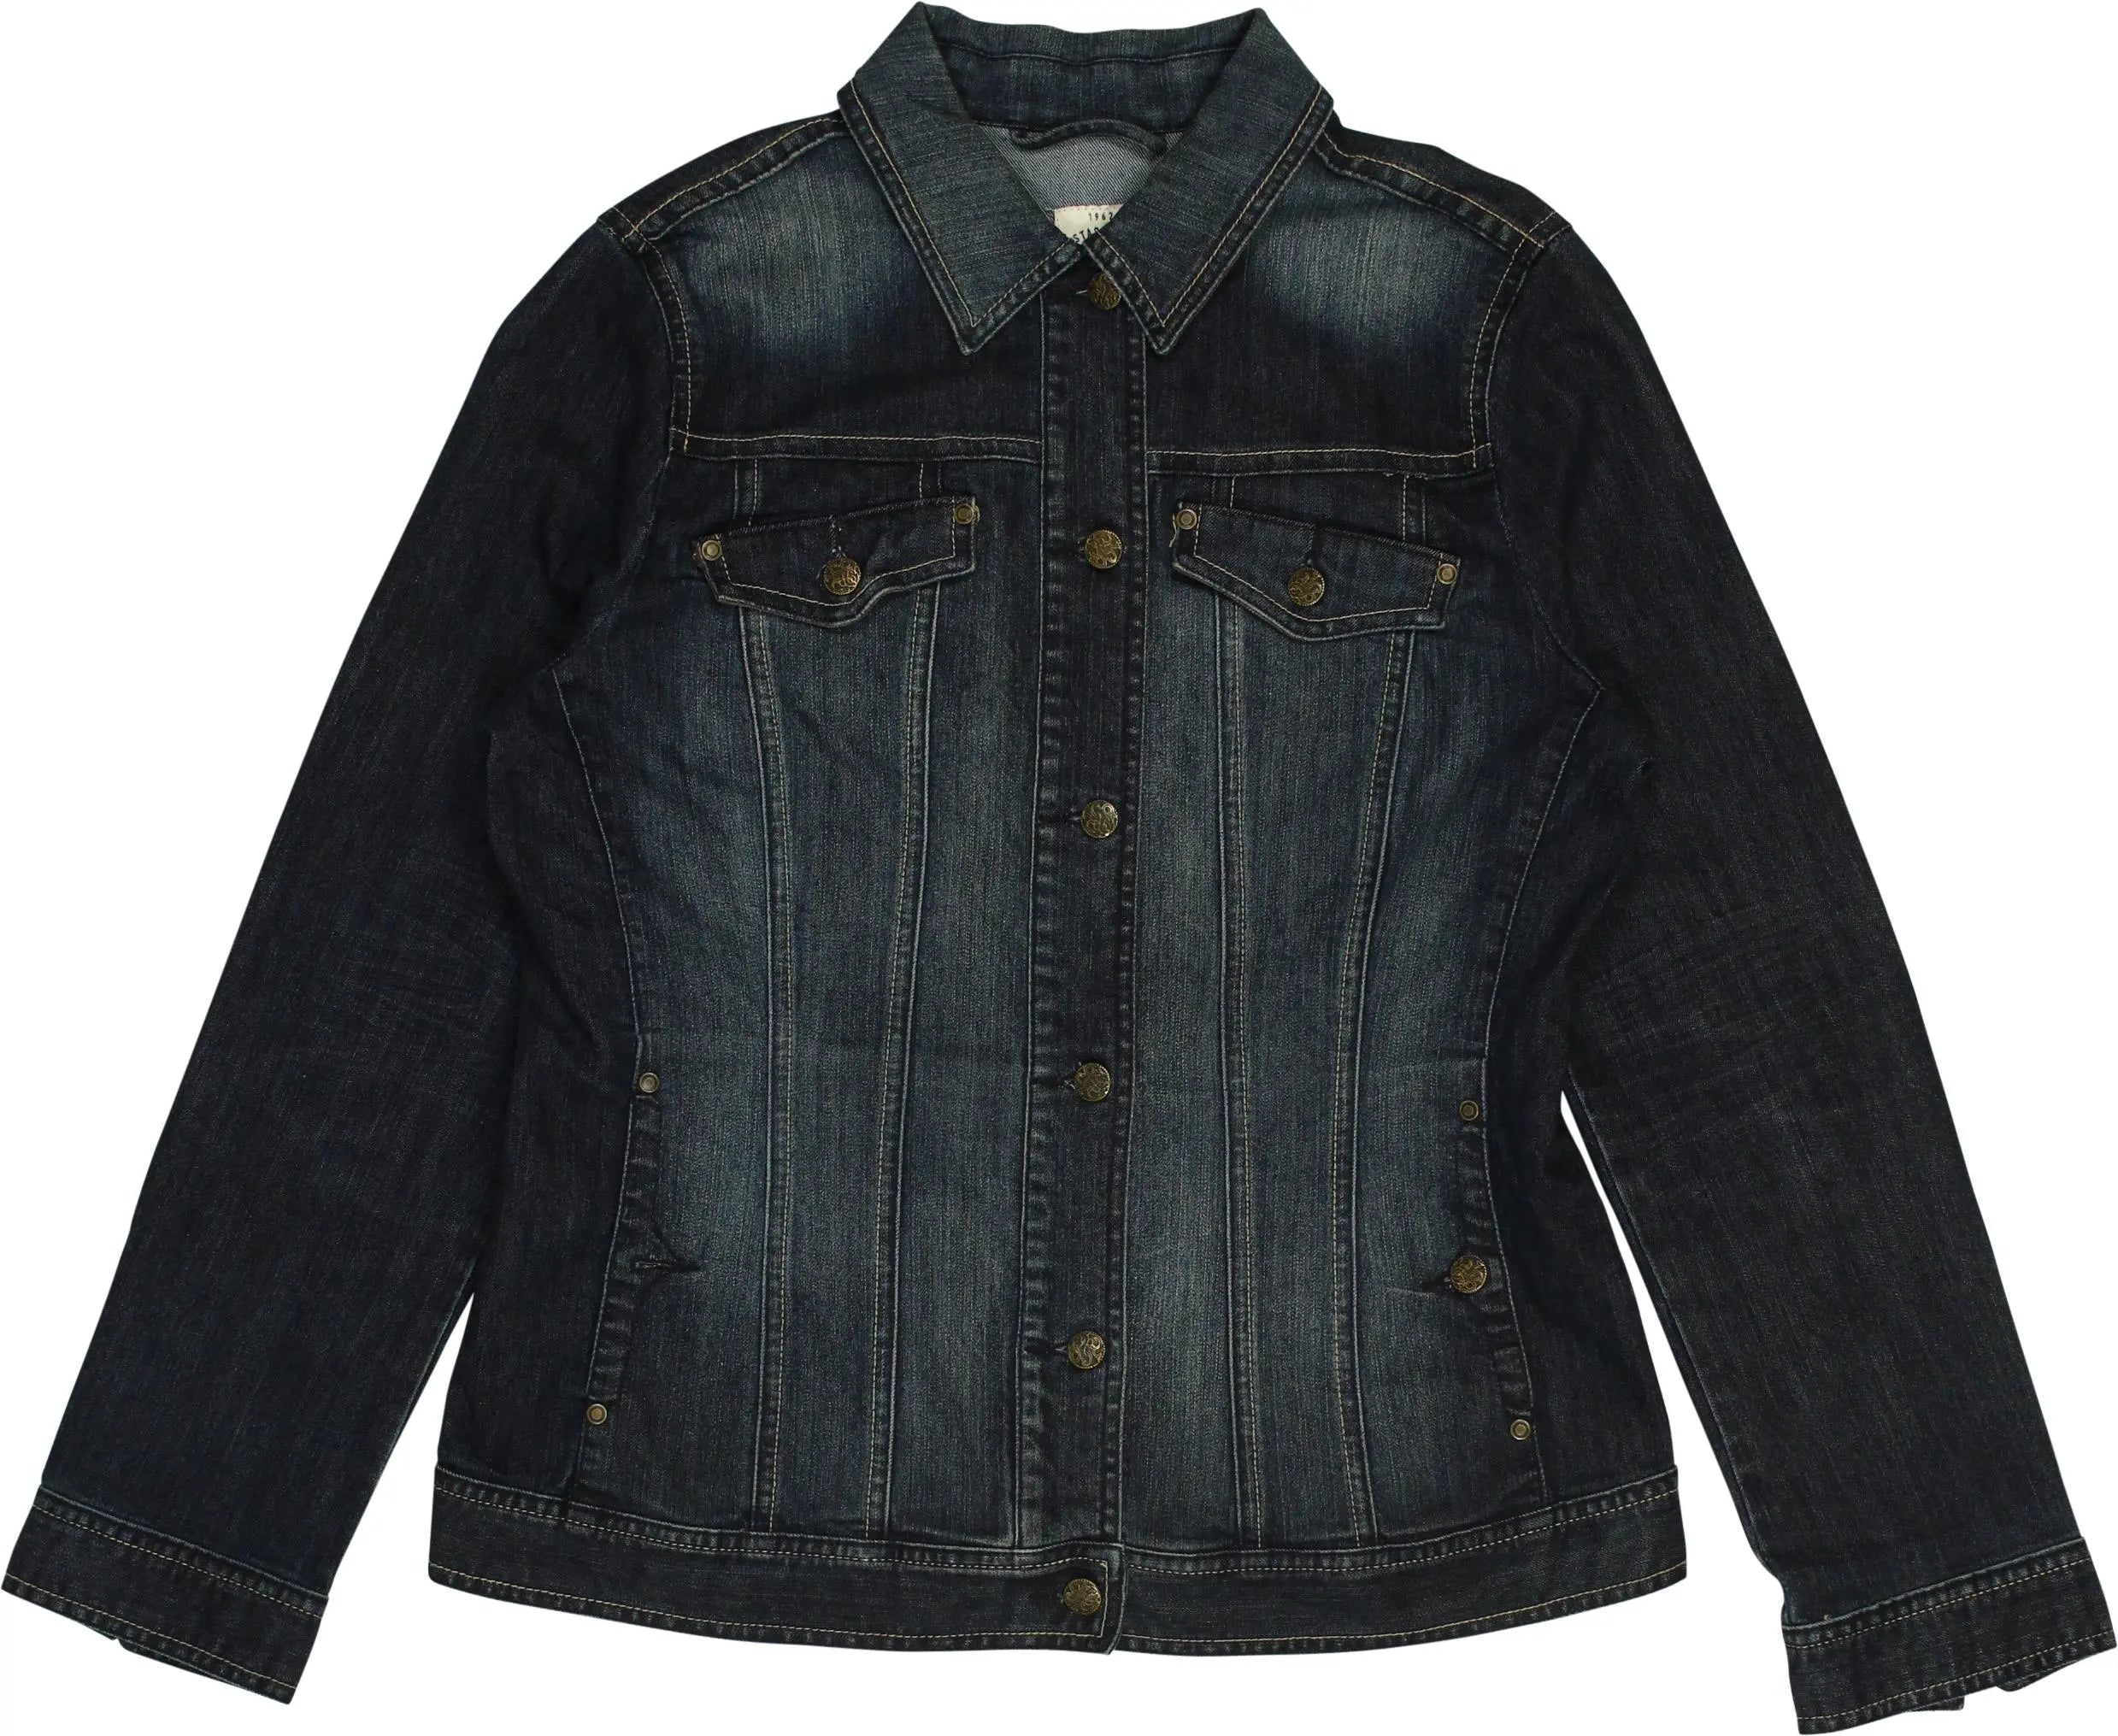 Tom Tailor - Denim Jacket- ThriftTale.com - Vintage and second handclothing